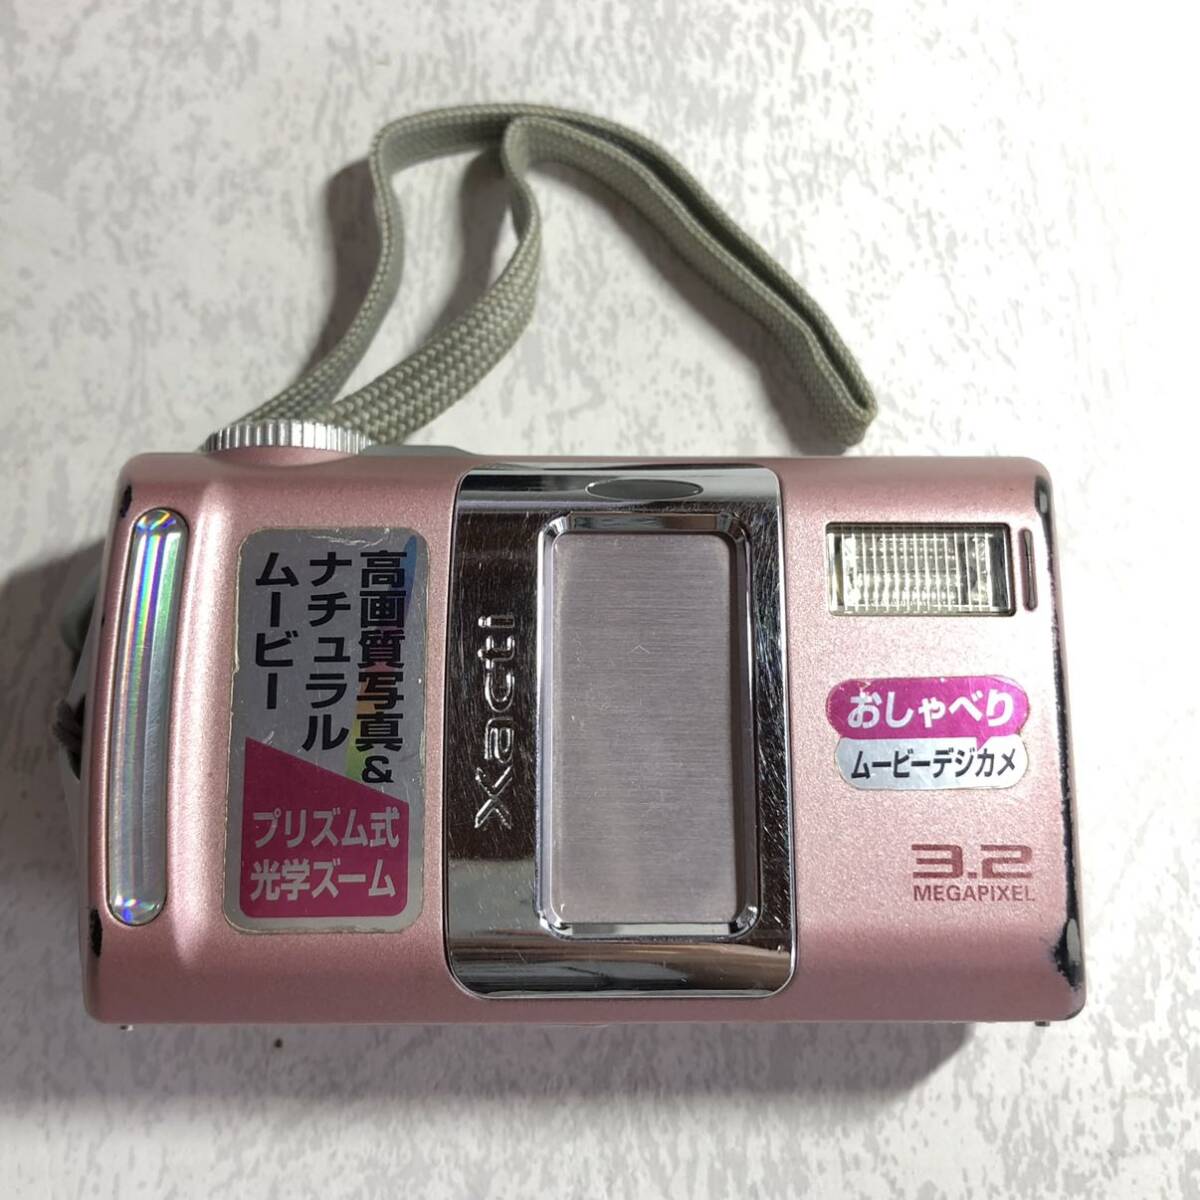 *SANYO Sanyo digital camera DSC-J1 type Xacti The kti Misty - pink instructions attaching box attaching V81